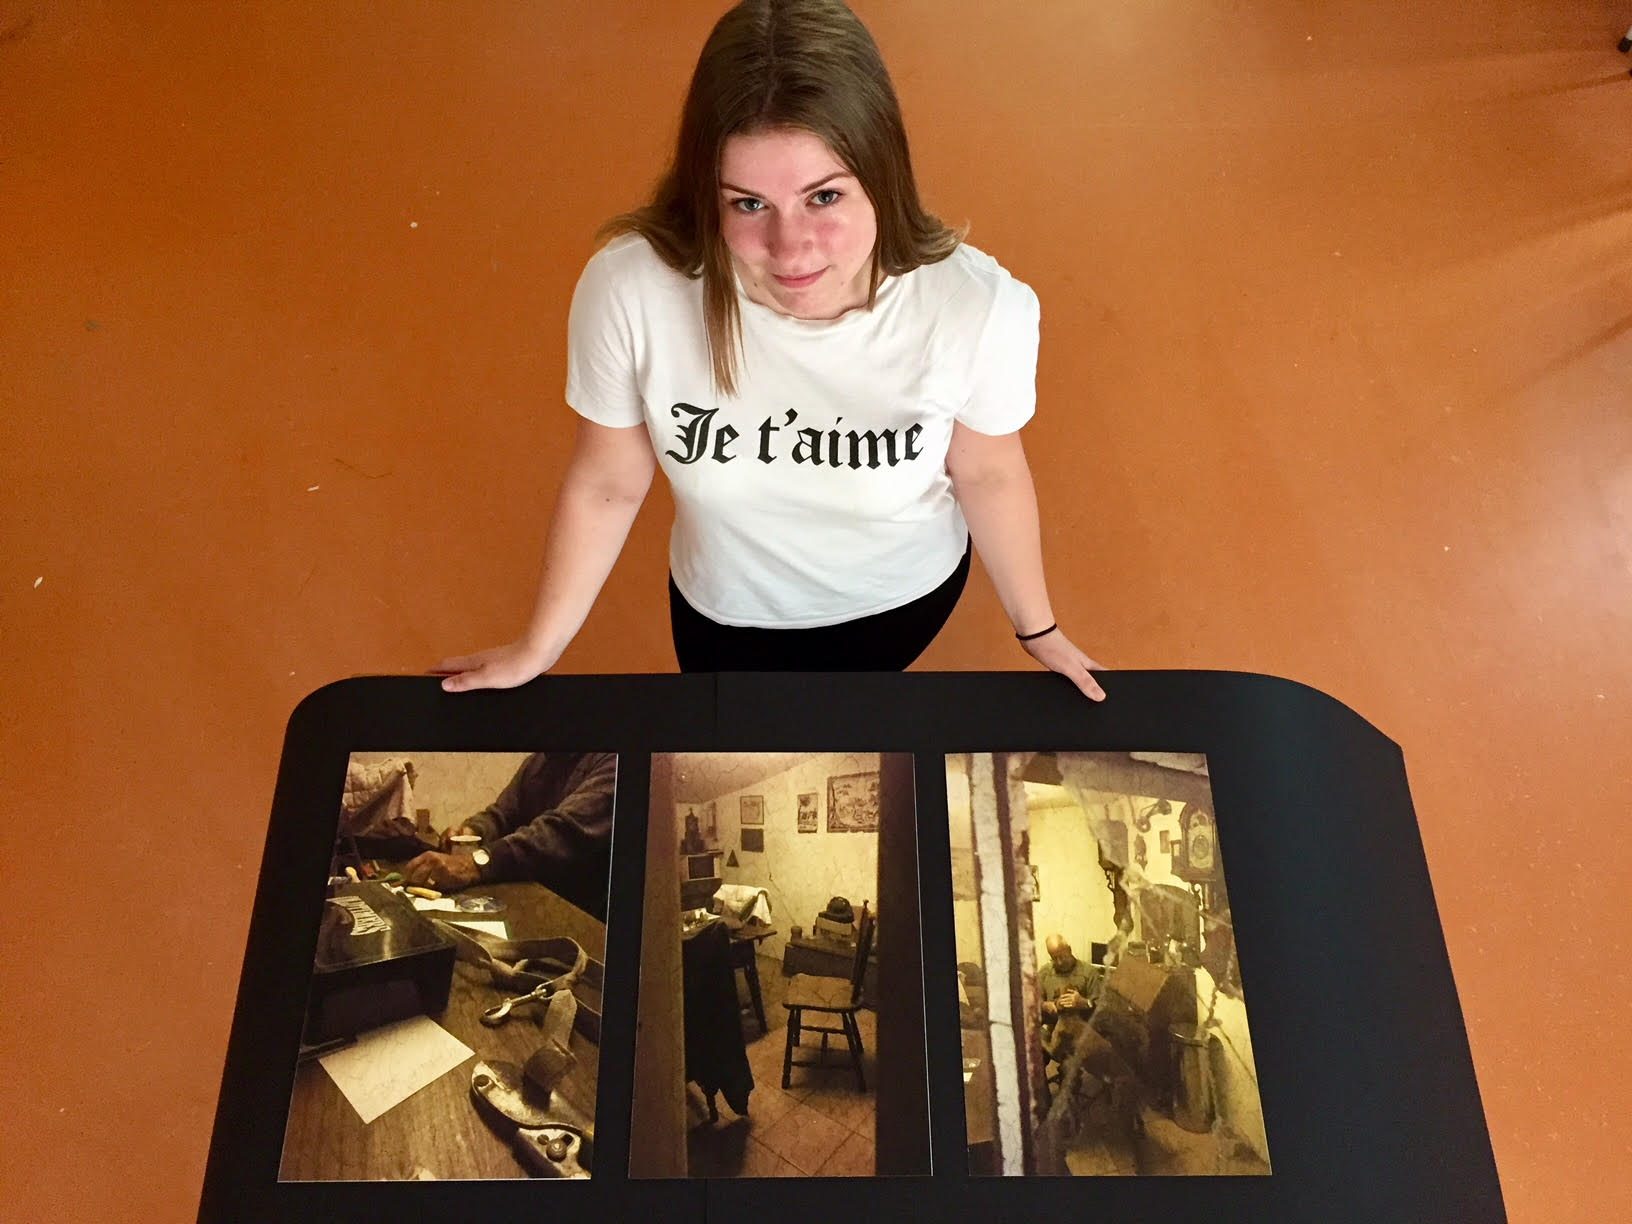 Woerdense leerling wint fotowedstrijd van Rijksmuseum